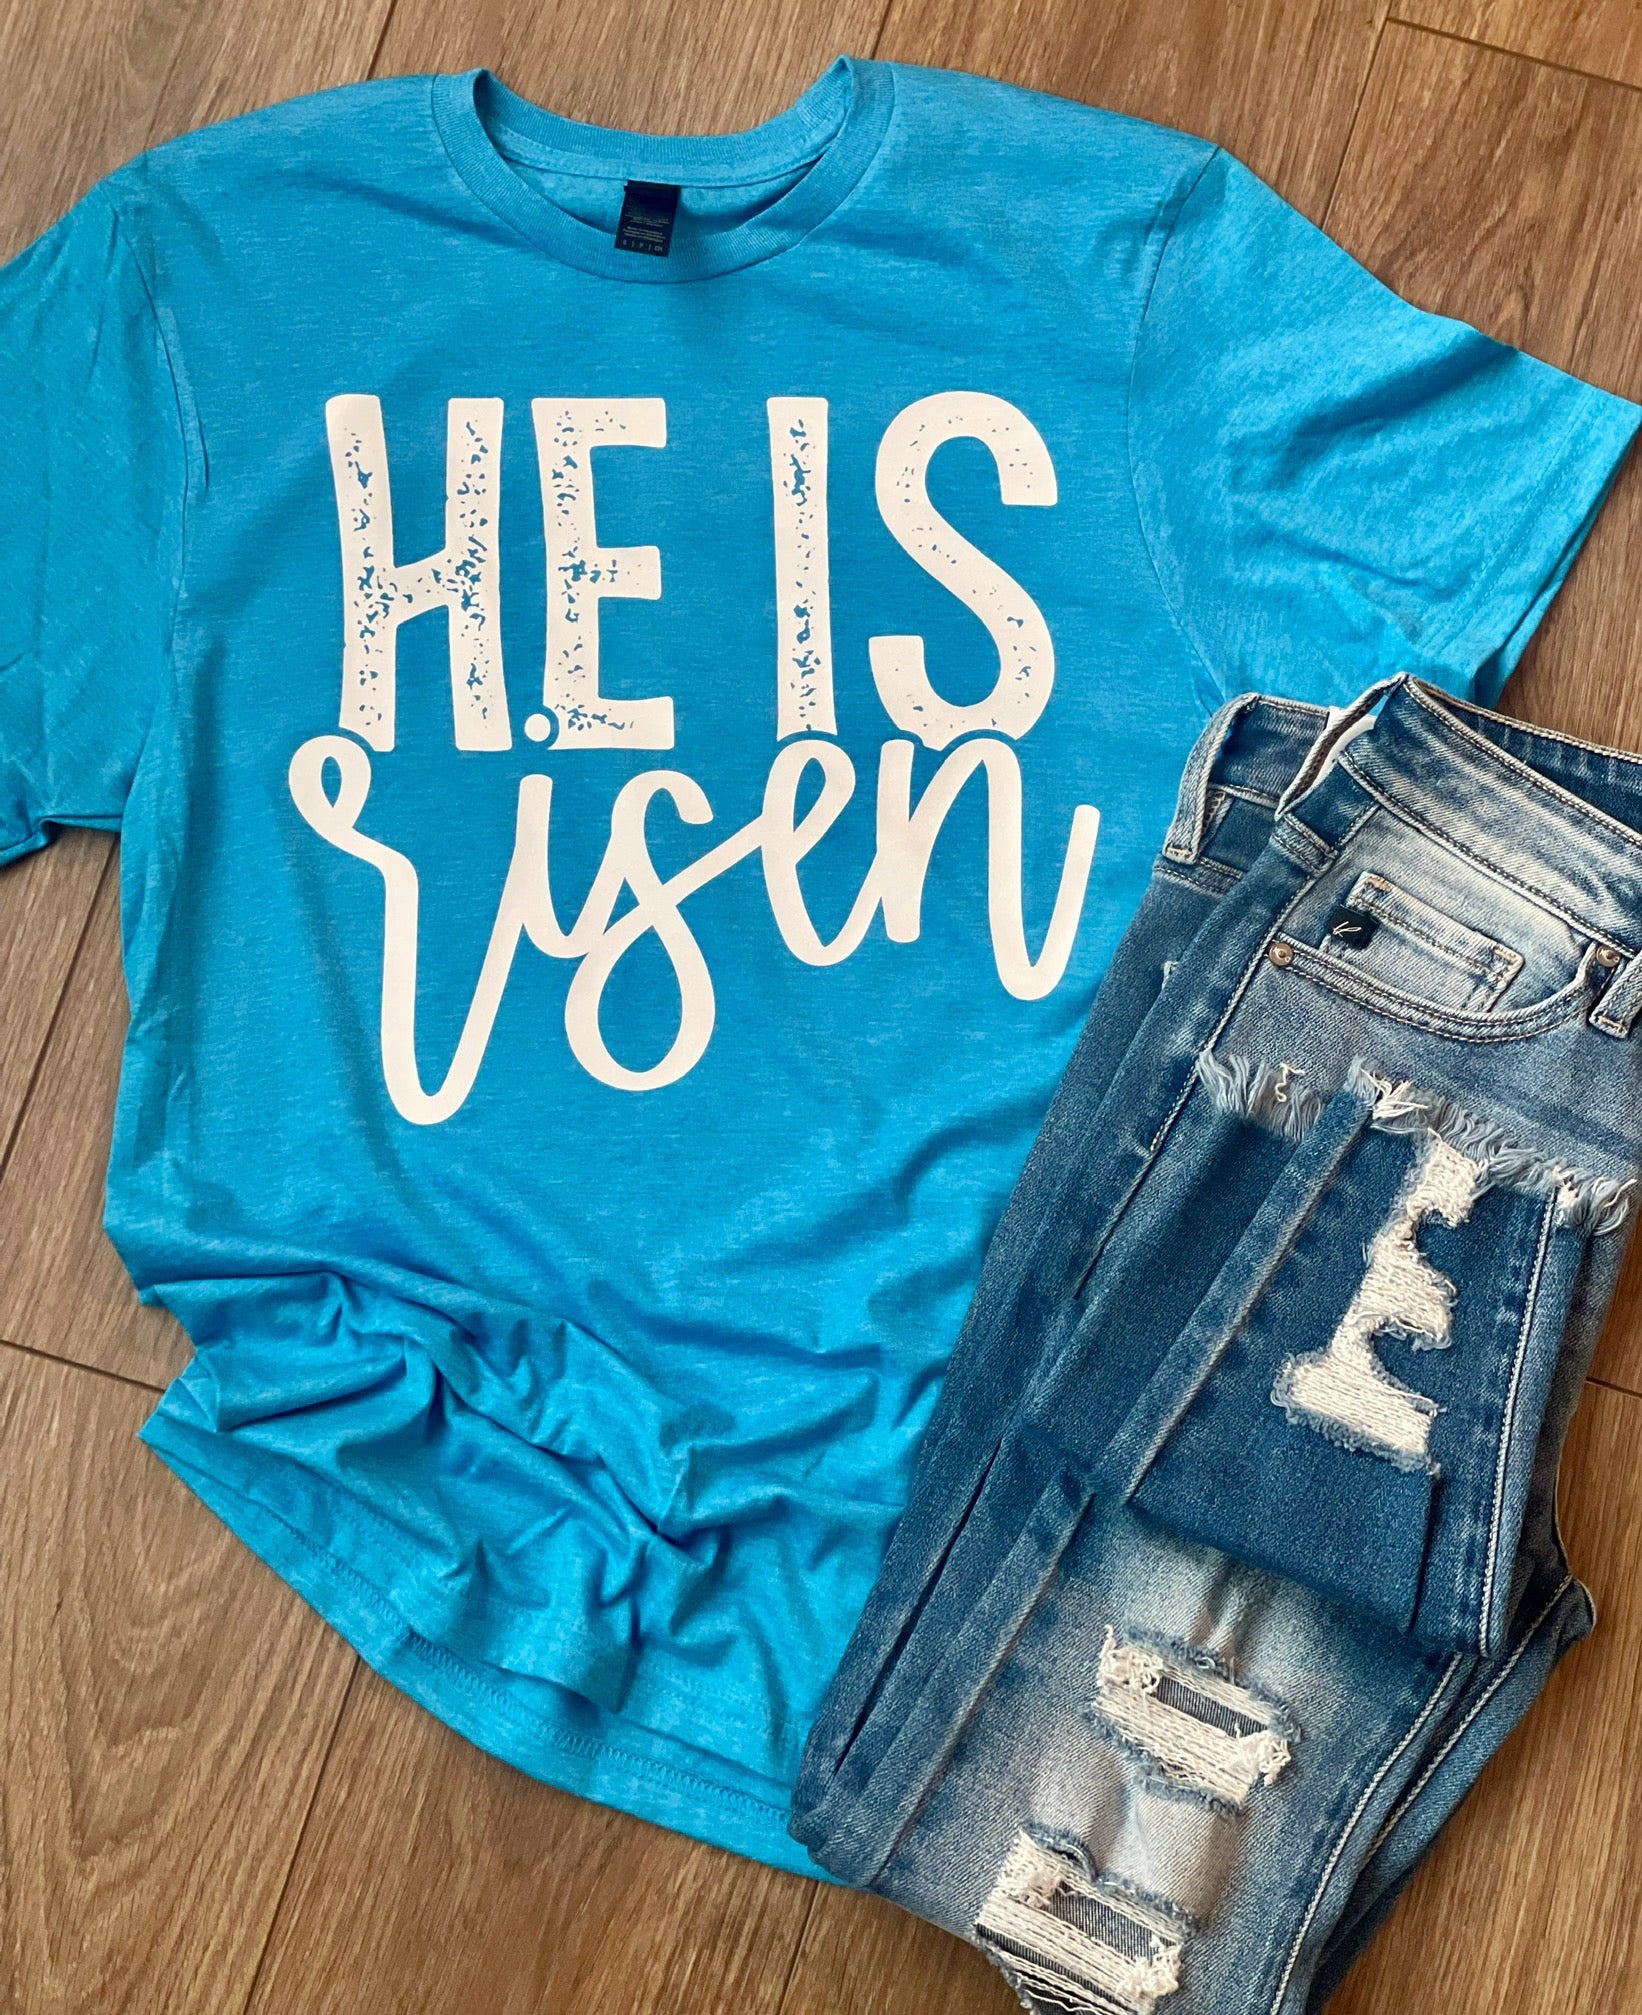 He is risen, Easter, God, tshirt, t-shirt, Easter tee, Easter shirt